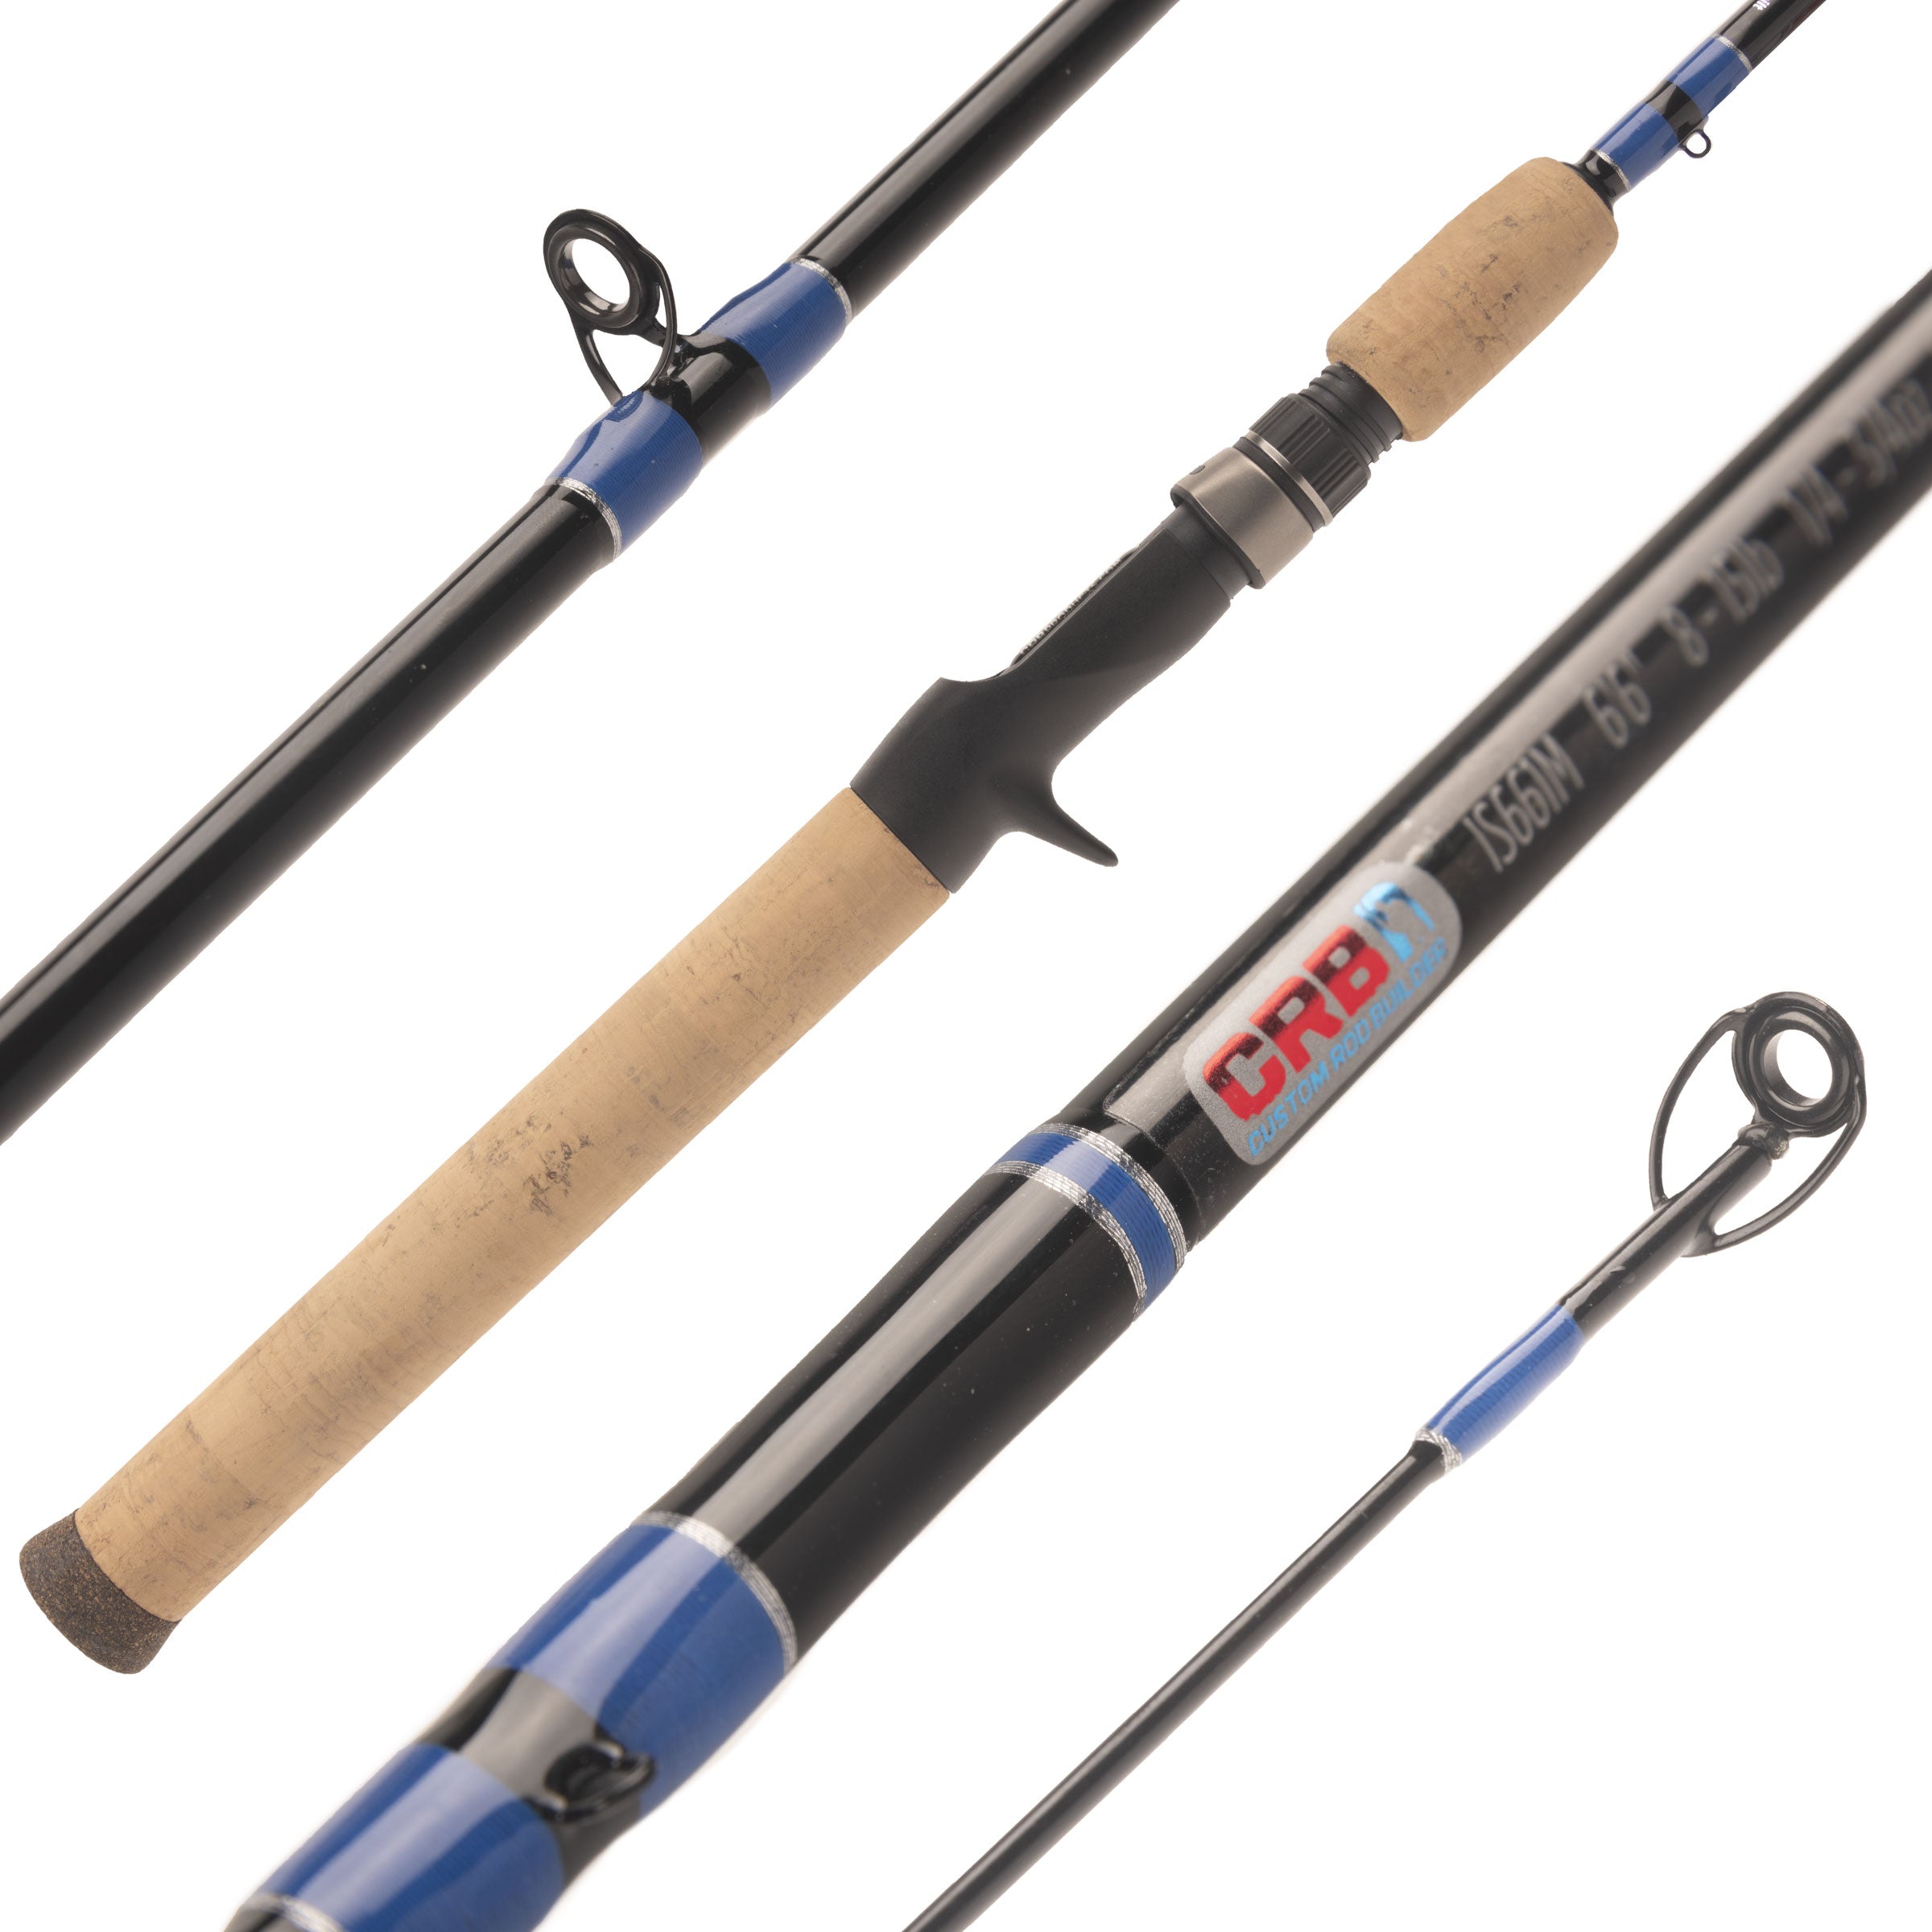 Coastal Bend Custom Rods - Texas built custom fishing rods